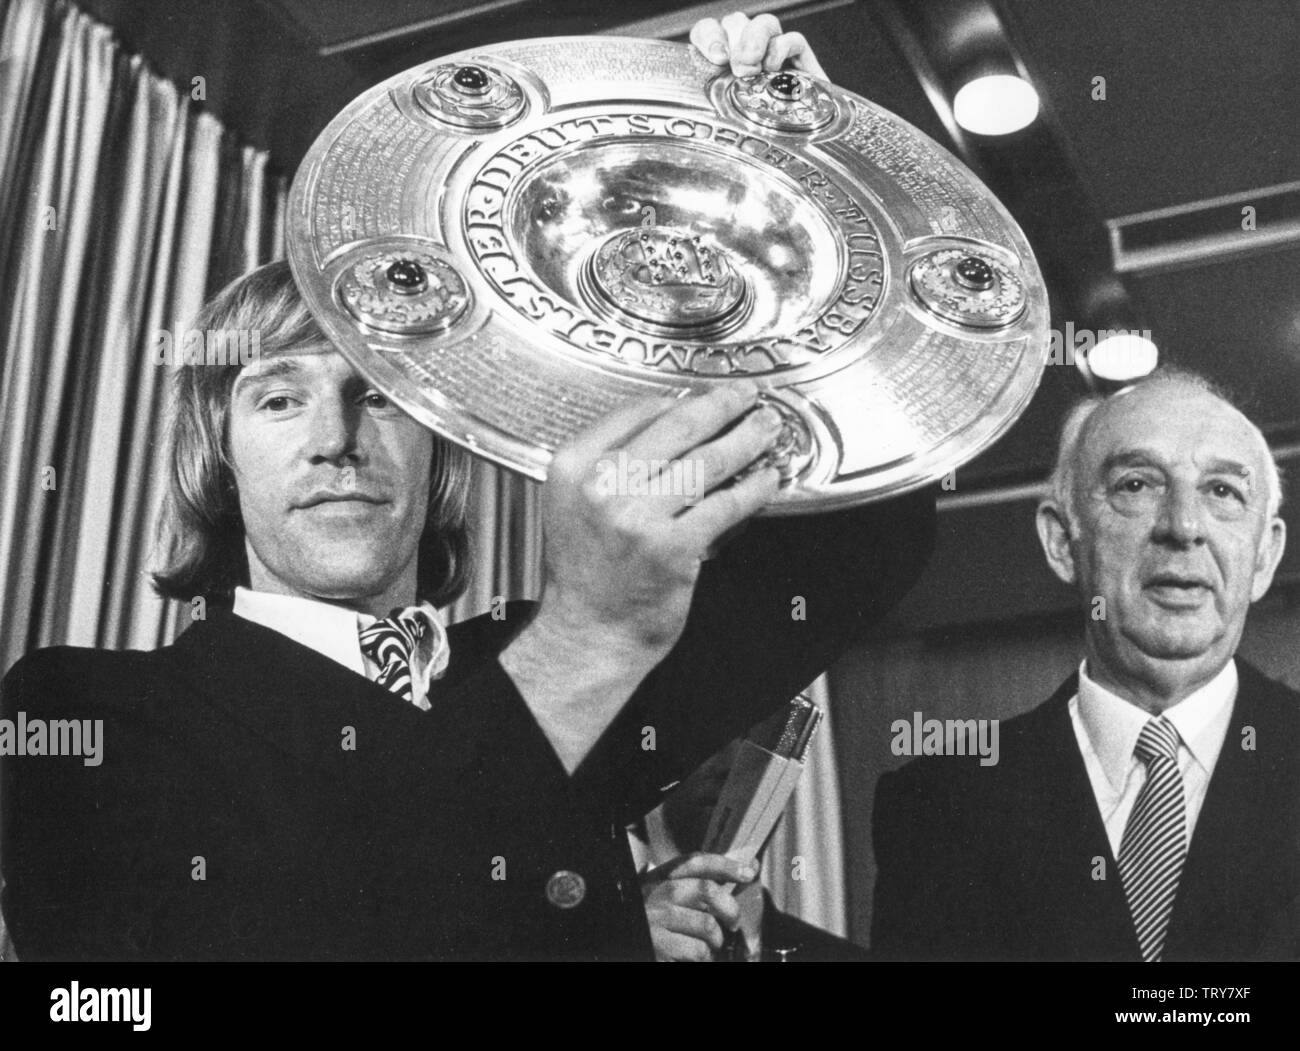 The captain of Borrusia Mönchengladbach, Günter Netzer, on 5 June 1971 in Frankfurt with the championship bowl presented by DFB President Hermann Gösmann (r). Netzer was born on 14 September 1944 in Mönchengladbach. | usage worldwide Stock Photo